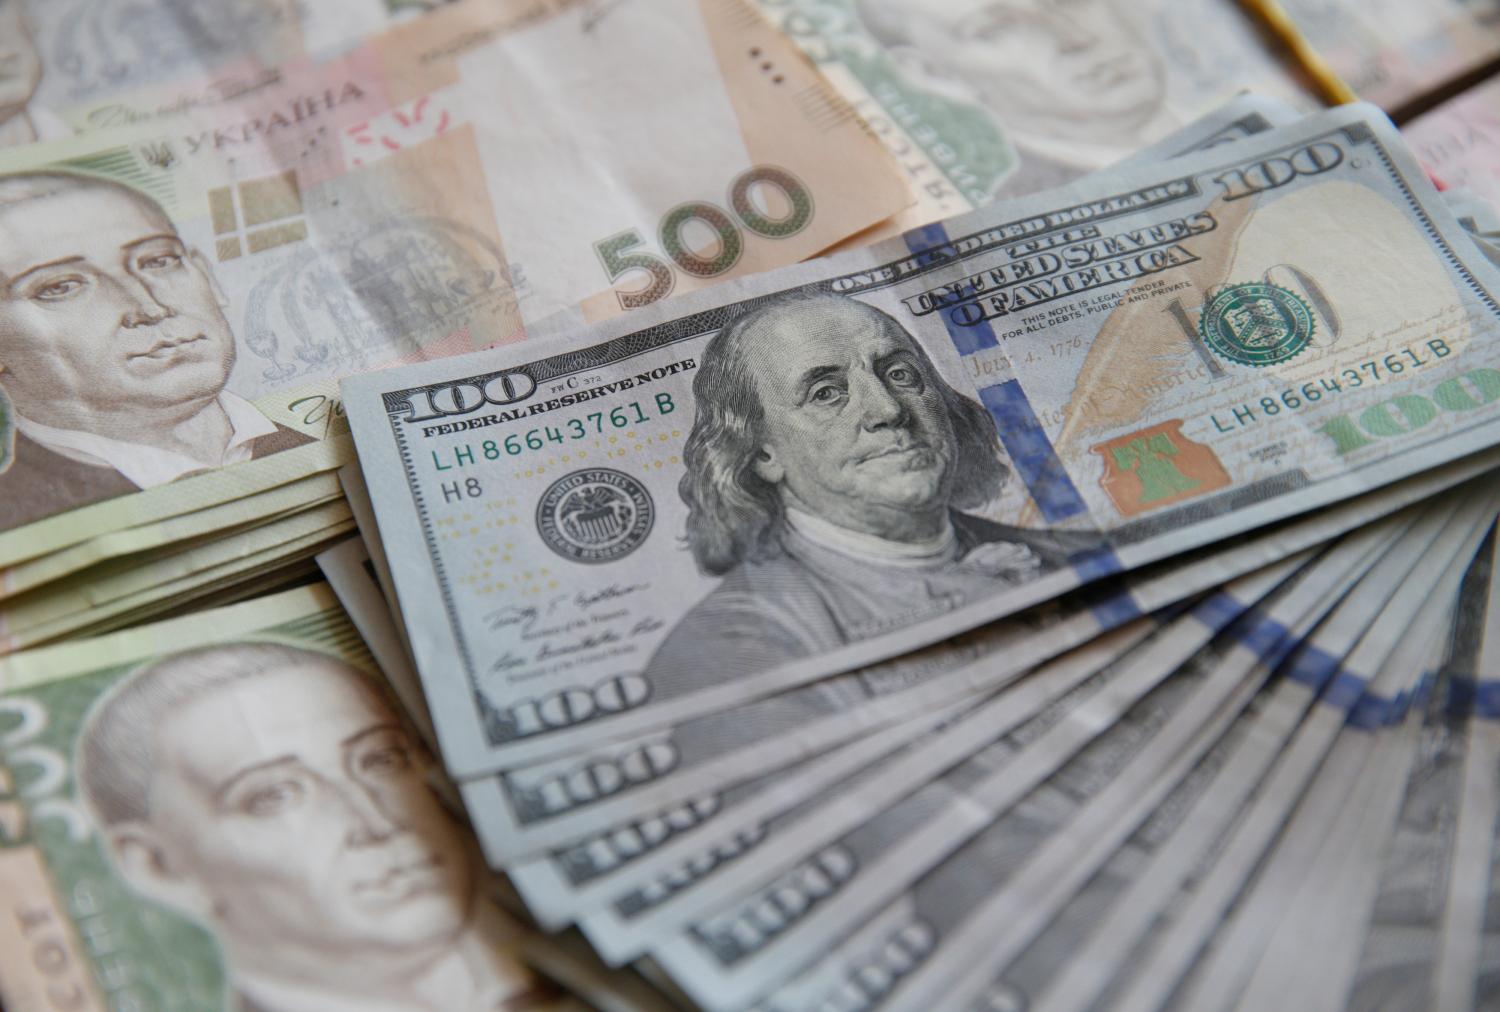 U.S. hundred dollar bills sit on top of Ukranian currency.